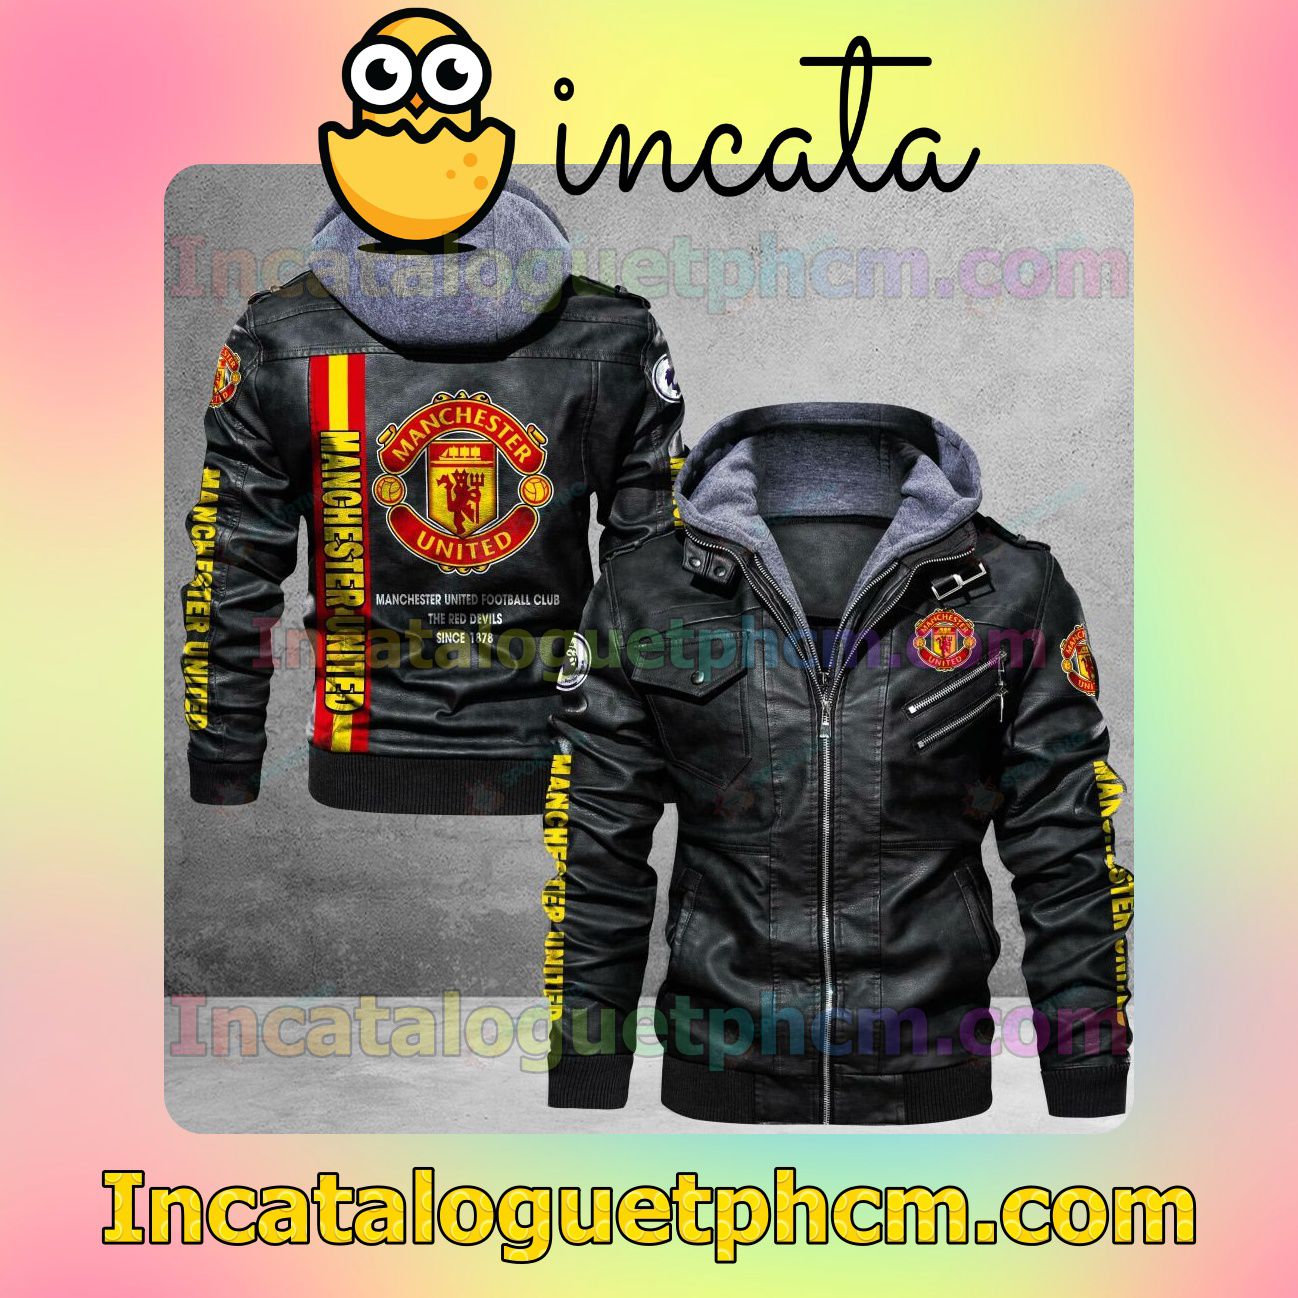 Manchester United Brand Uniform Leather Jacket